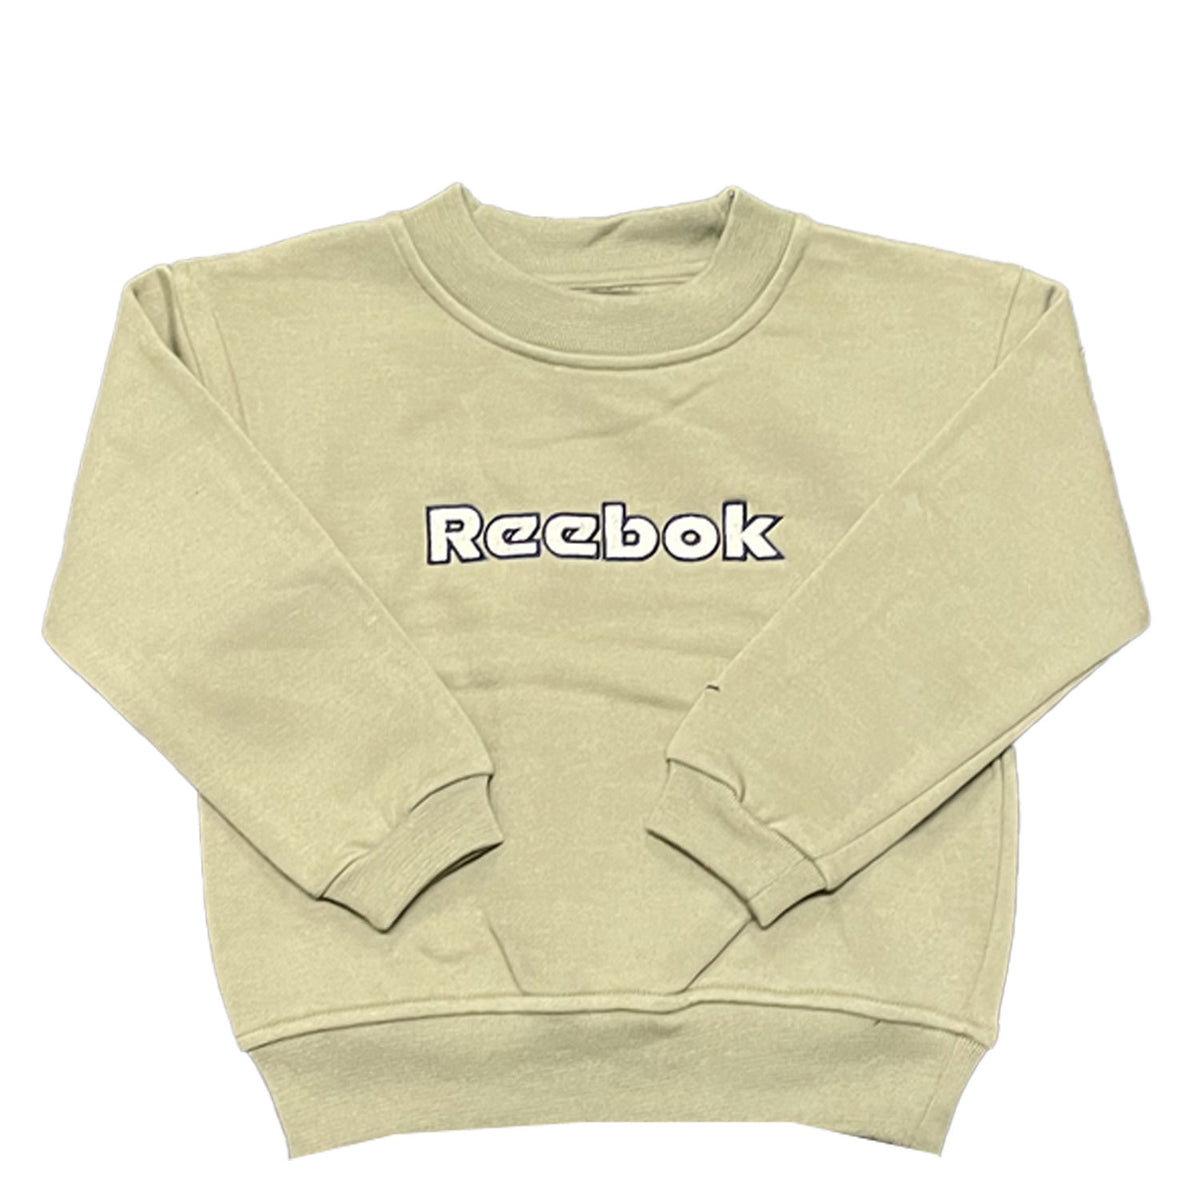 Reebok Infant Sports Range Sweatshirt